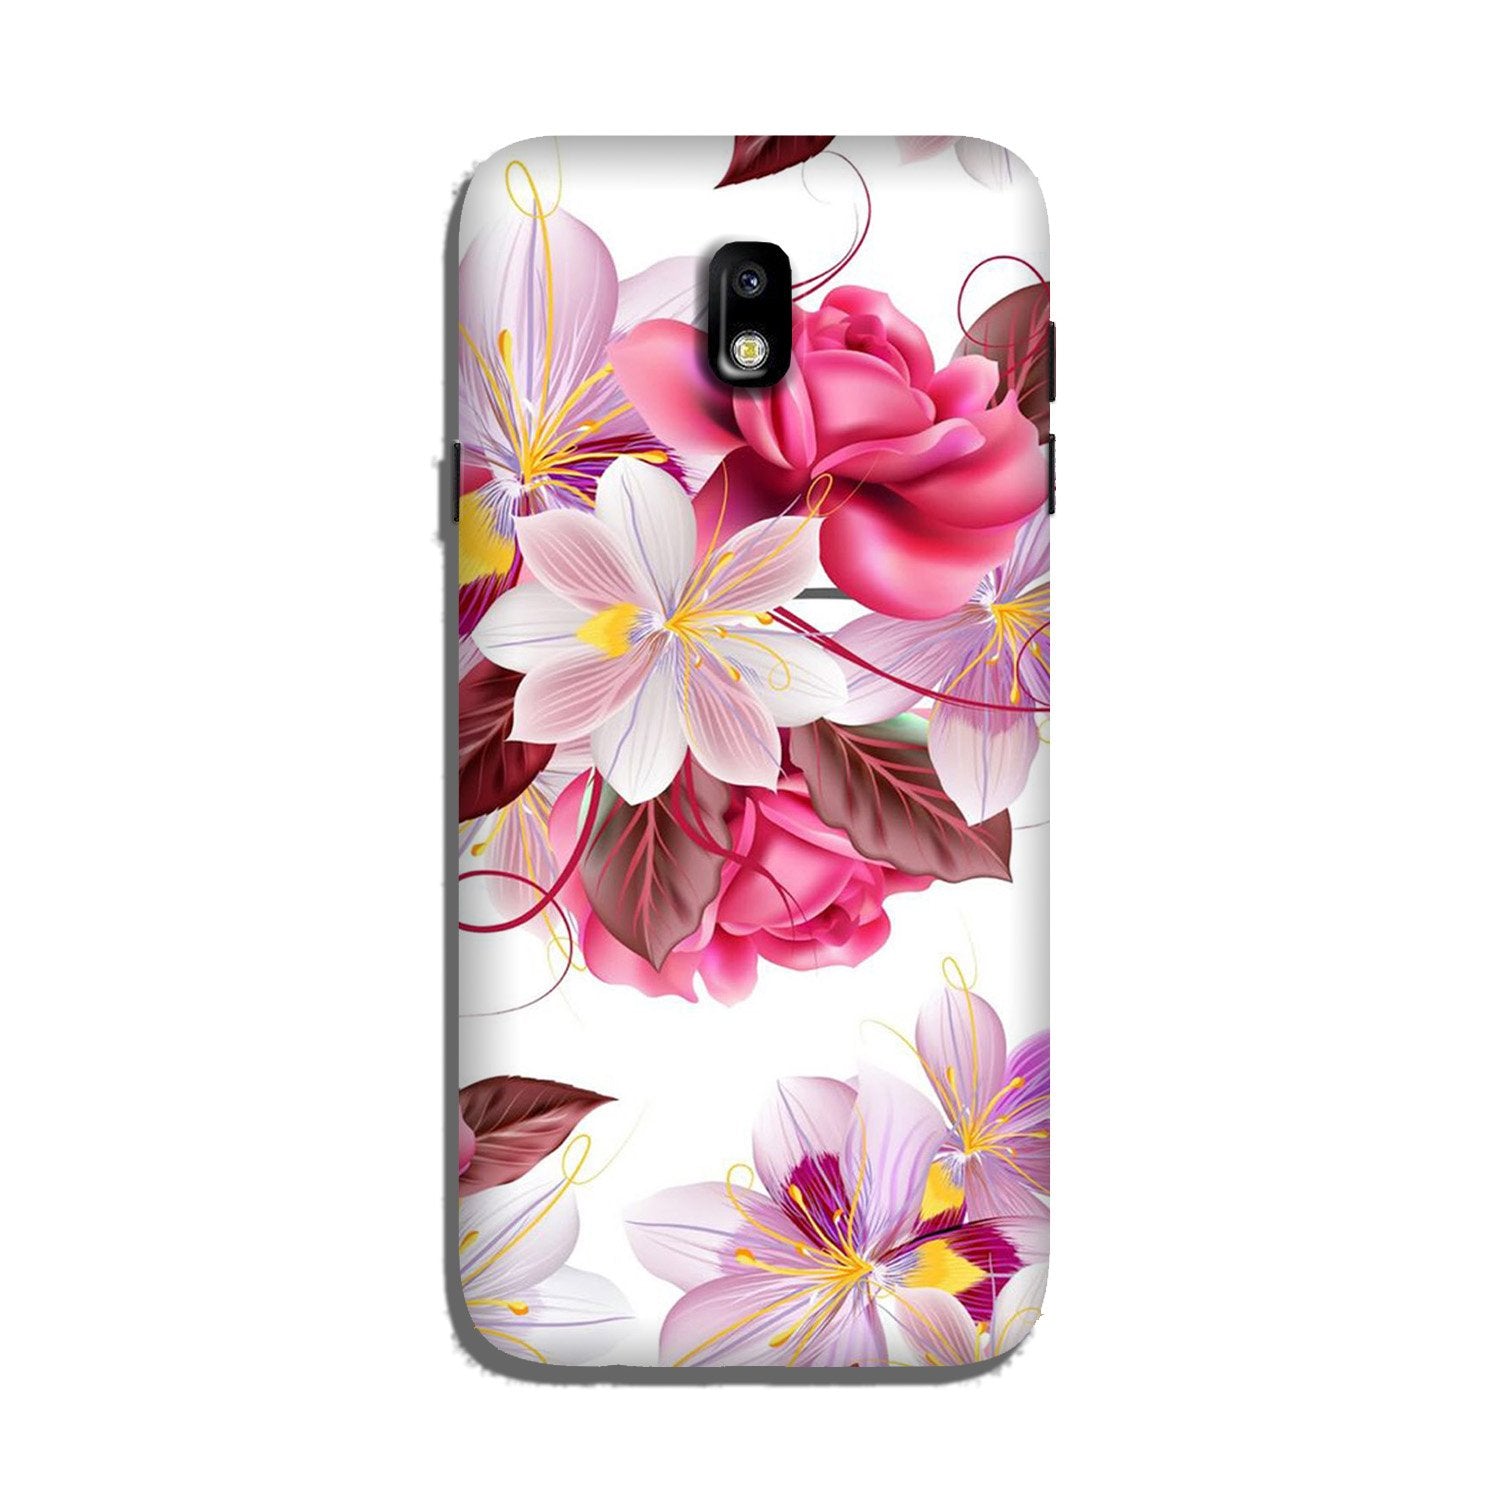 Beautiful flowers Case for Galaxy J7 Pro